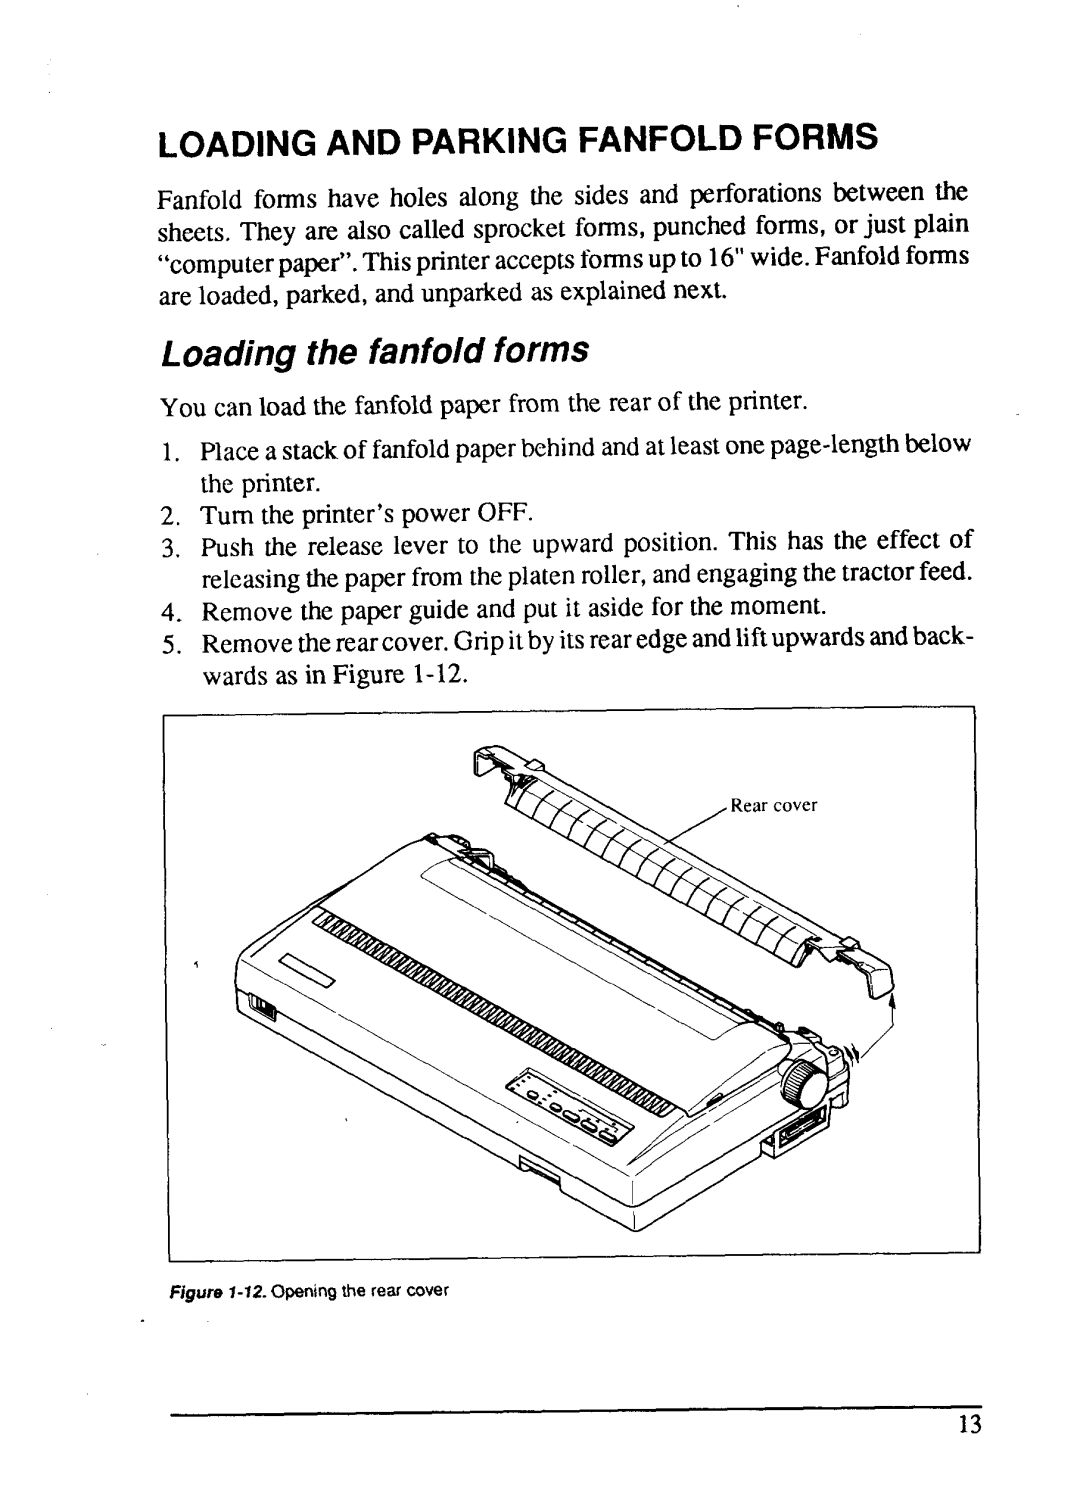 Star Micronics LC24-15 user manual Loading the fanfold forms, Loading And Parking Fanfold Forms 